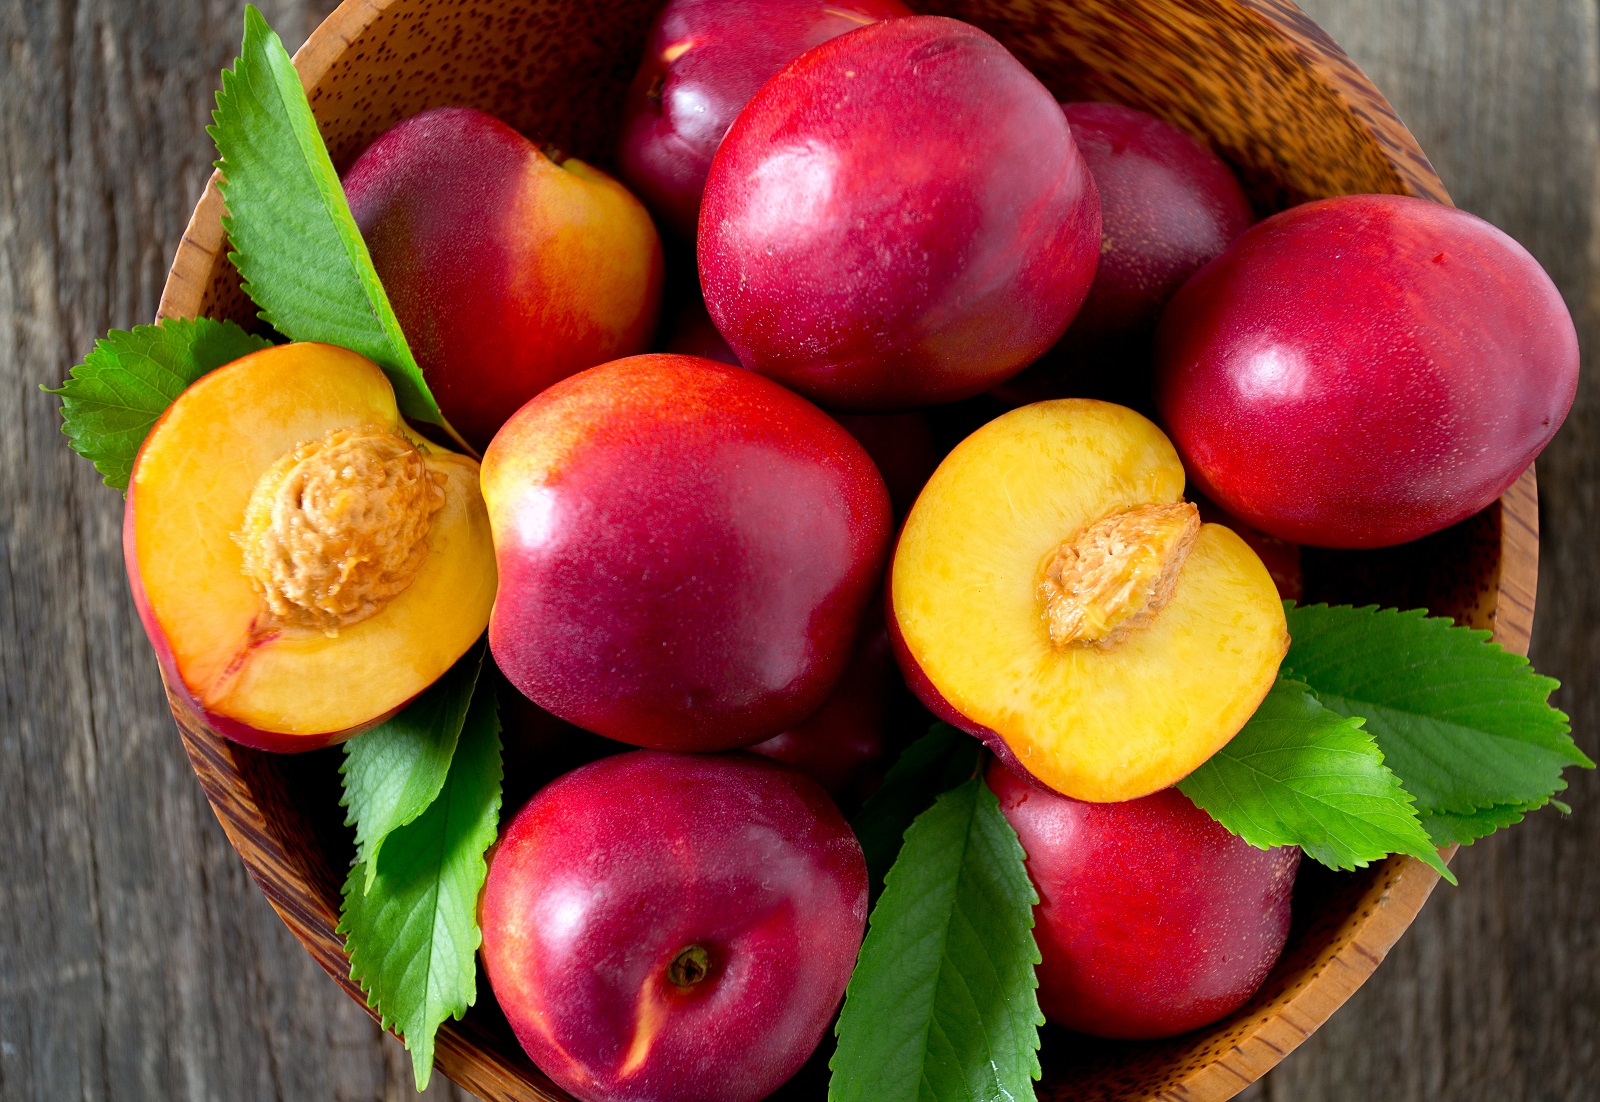 Panier de nectarines, fruits sucrés et juteux. © Diana Taliun, AdobeStock